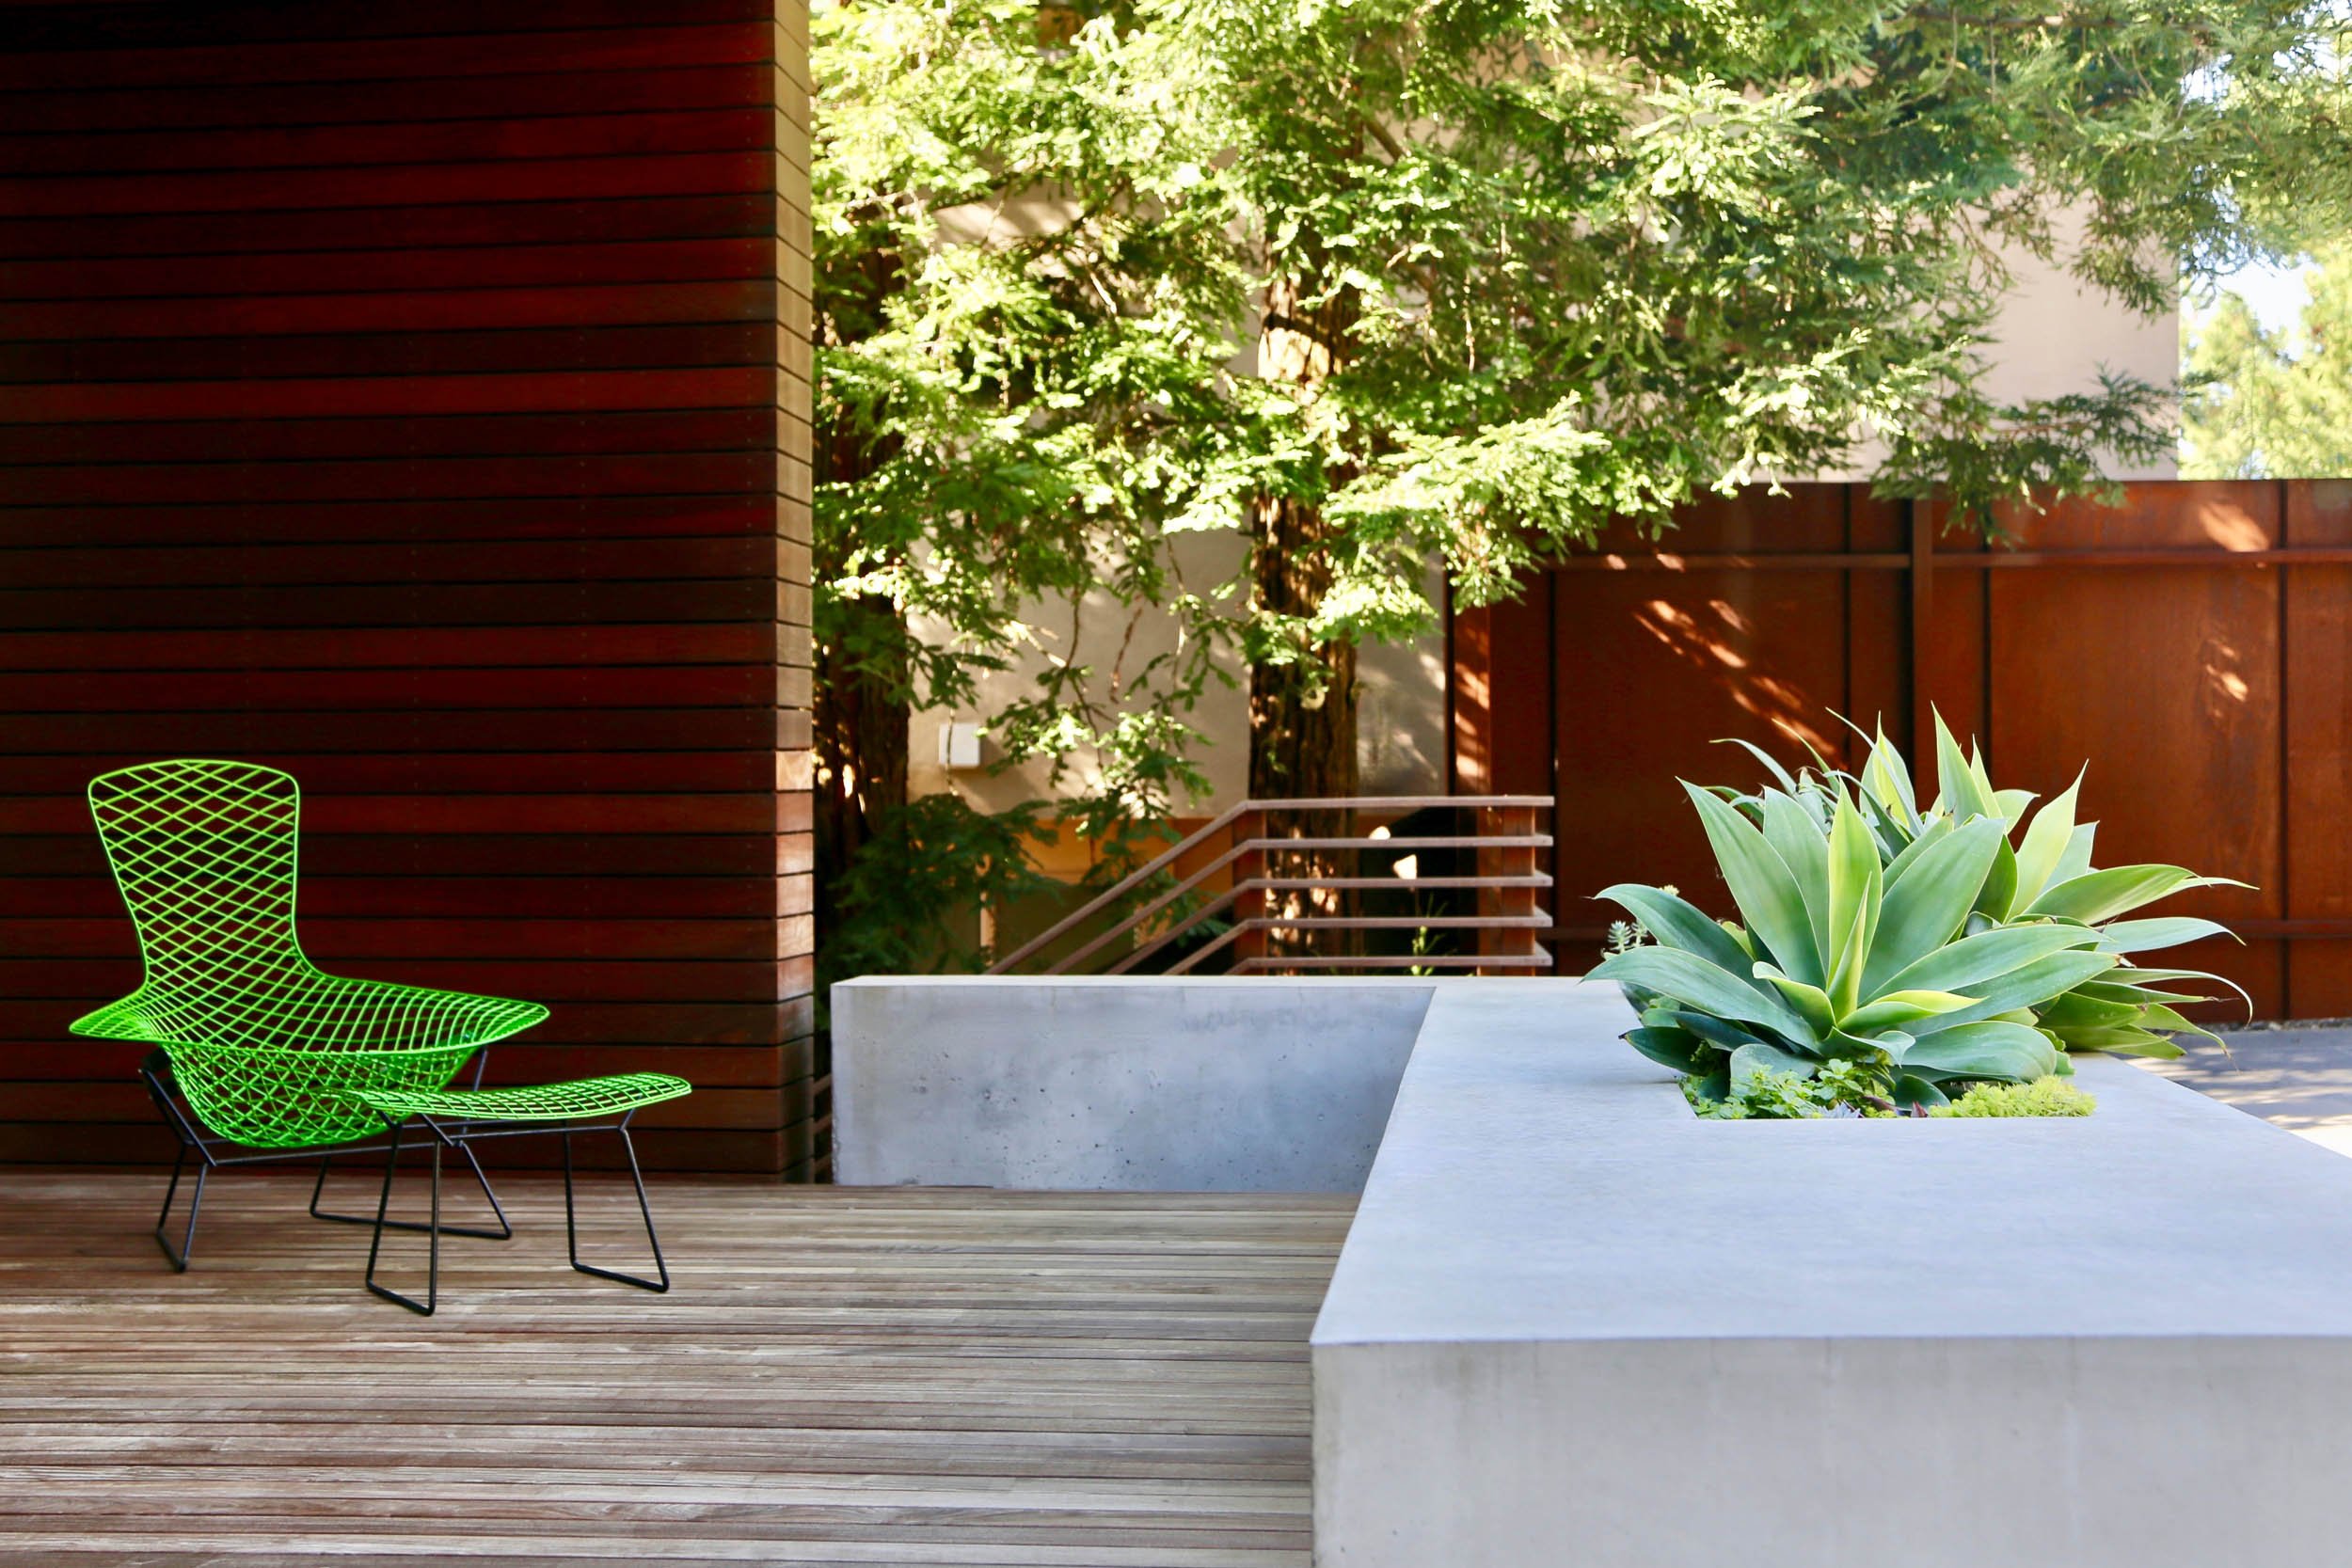 9 Concrete Agave Attenuata Hardwood Fence Porch Modern Contemporary.jpg